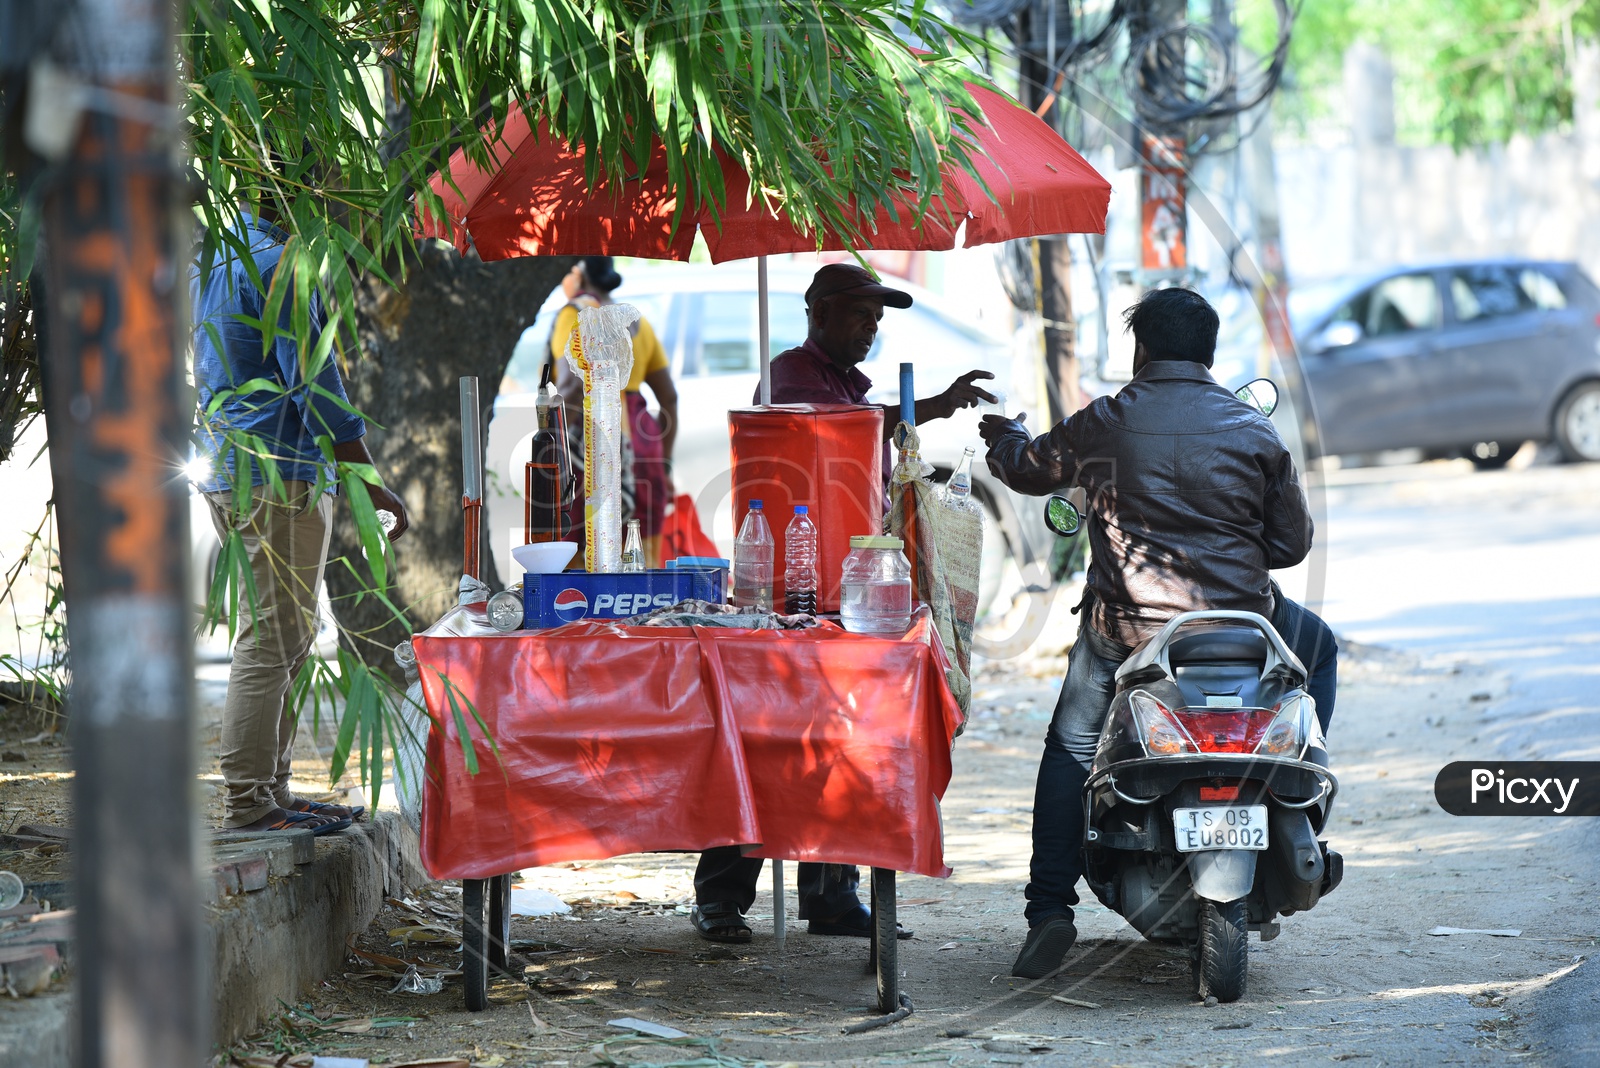 A Biker drinking Lemon Soda At a Road Side Street Vendor Stall